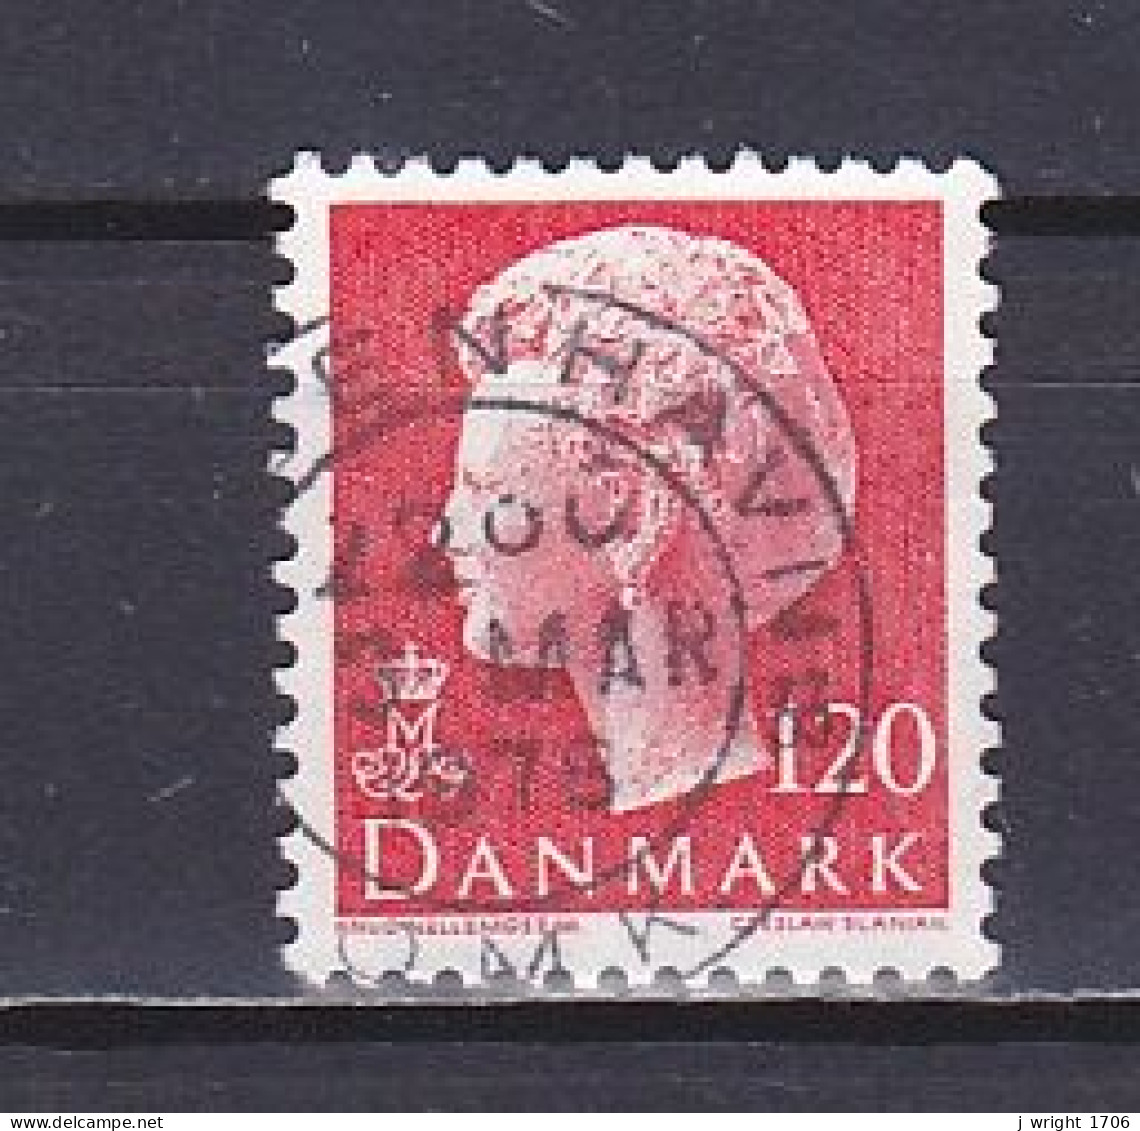 Denmark, 1977, Queen Margrethe II, 120ø, USED - Usati